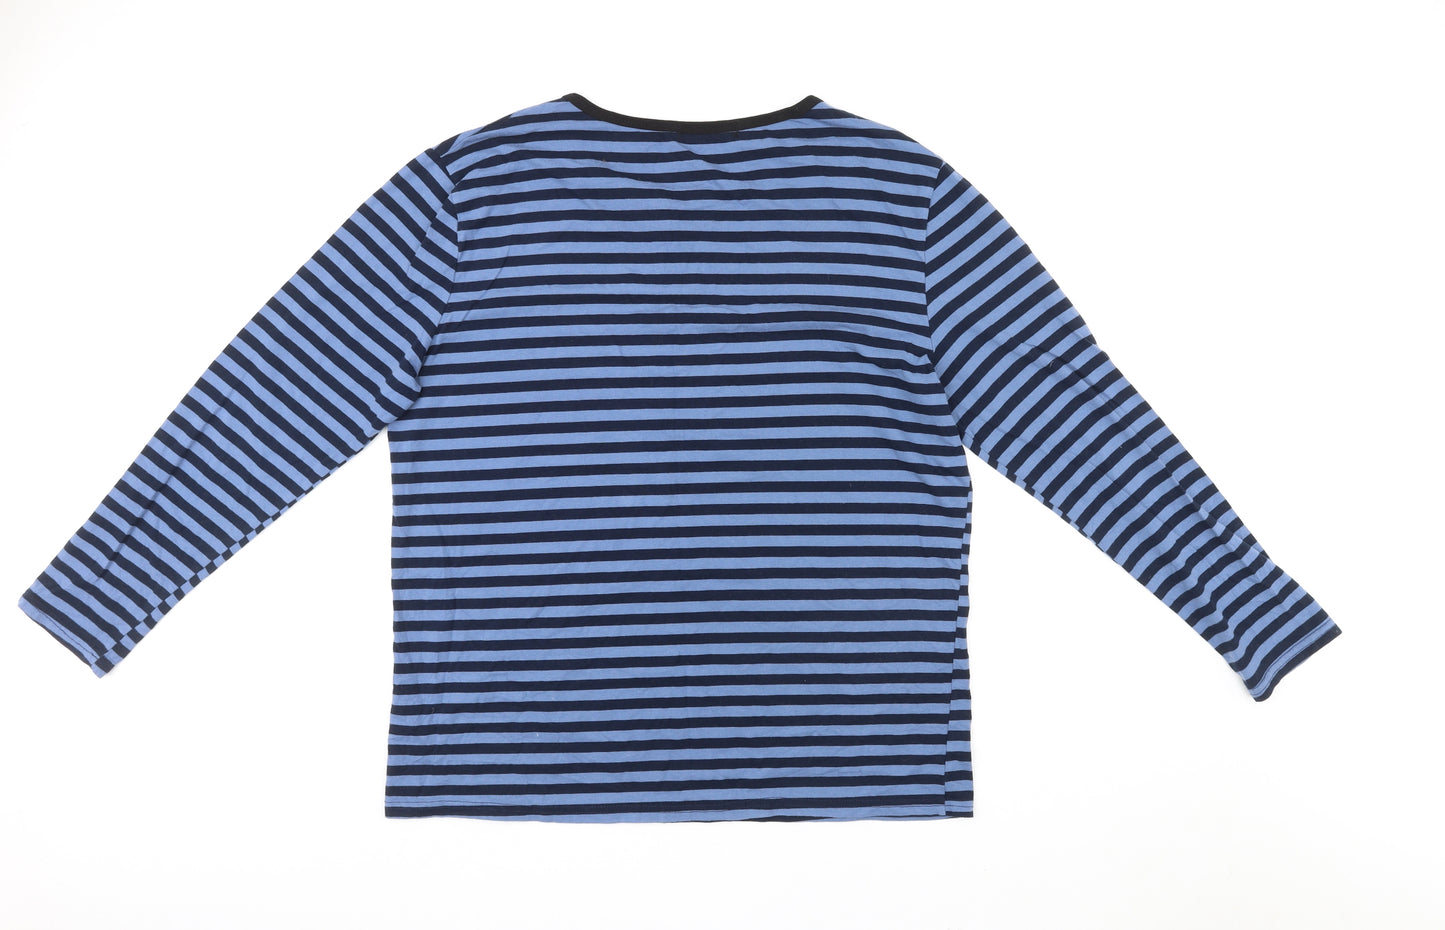 Aibrou Mens Multicoloured Striped Cotton T-Shirt Size XL Round Neck